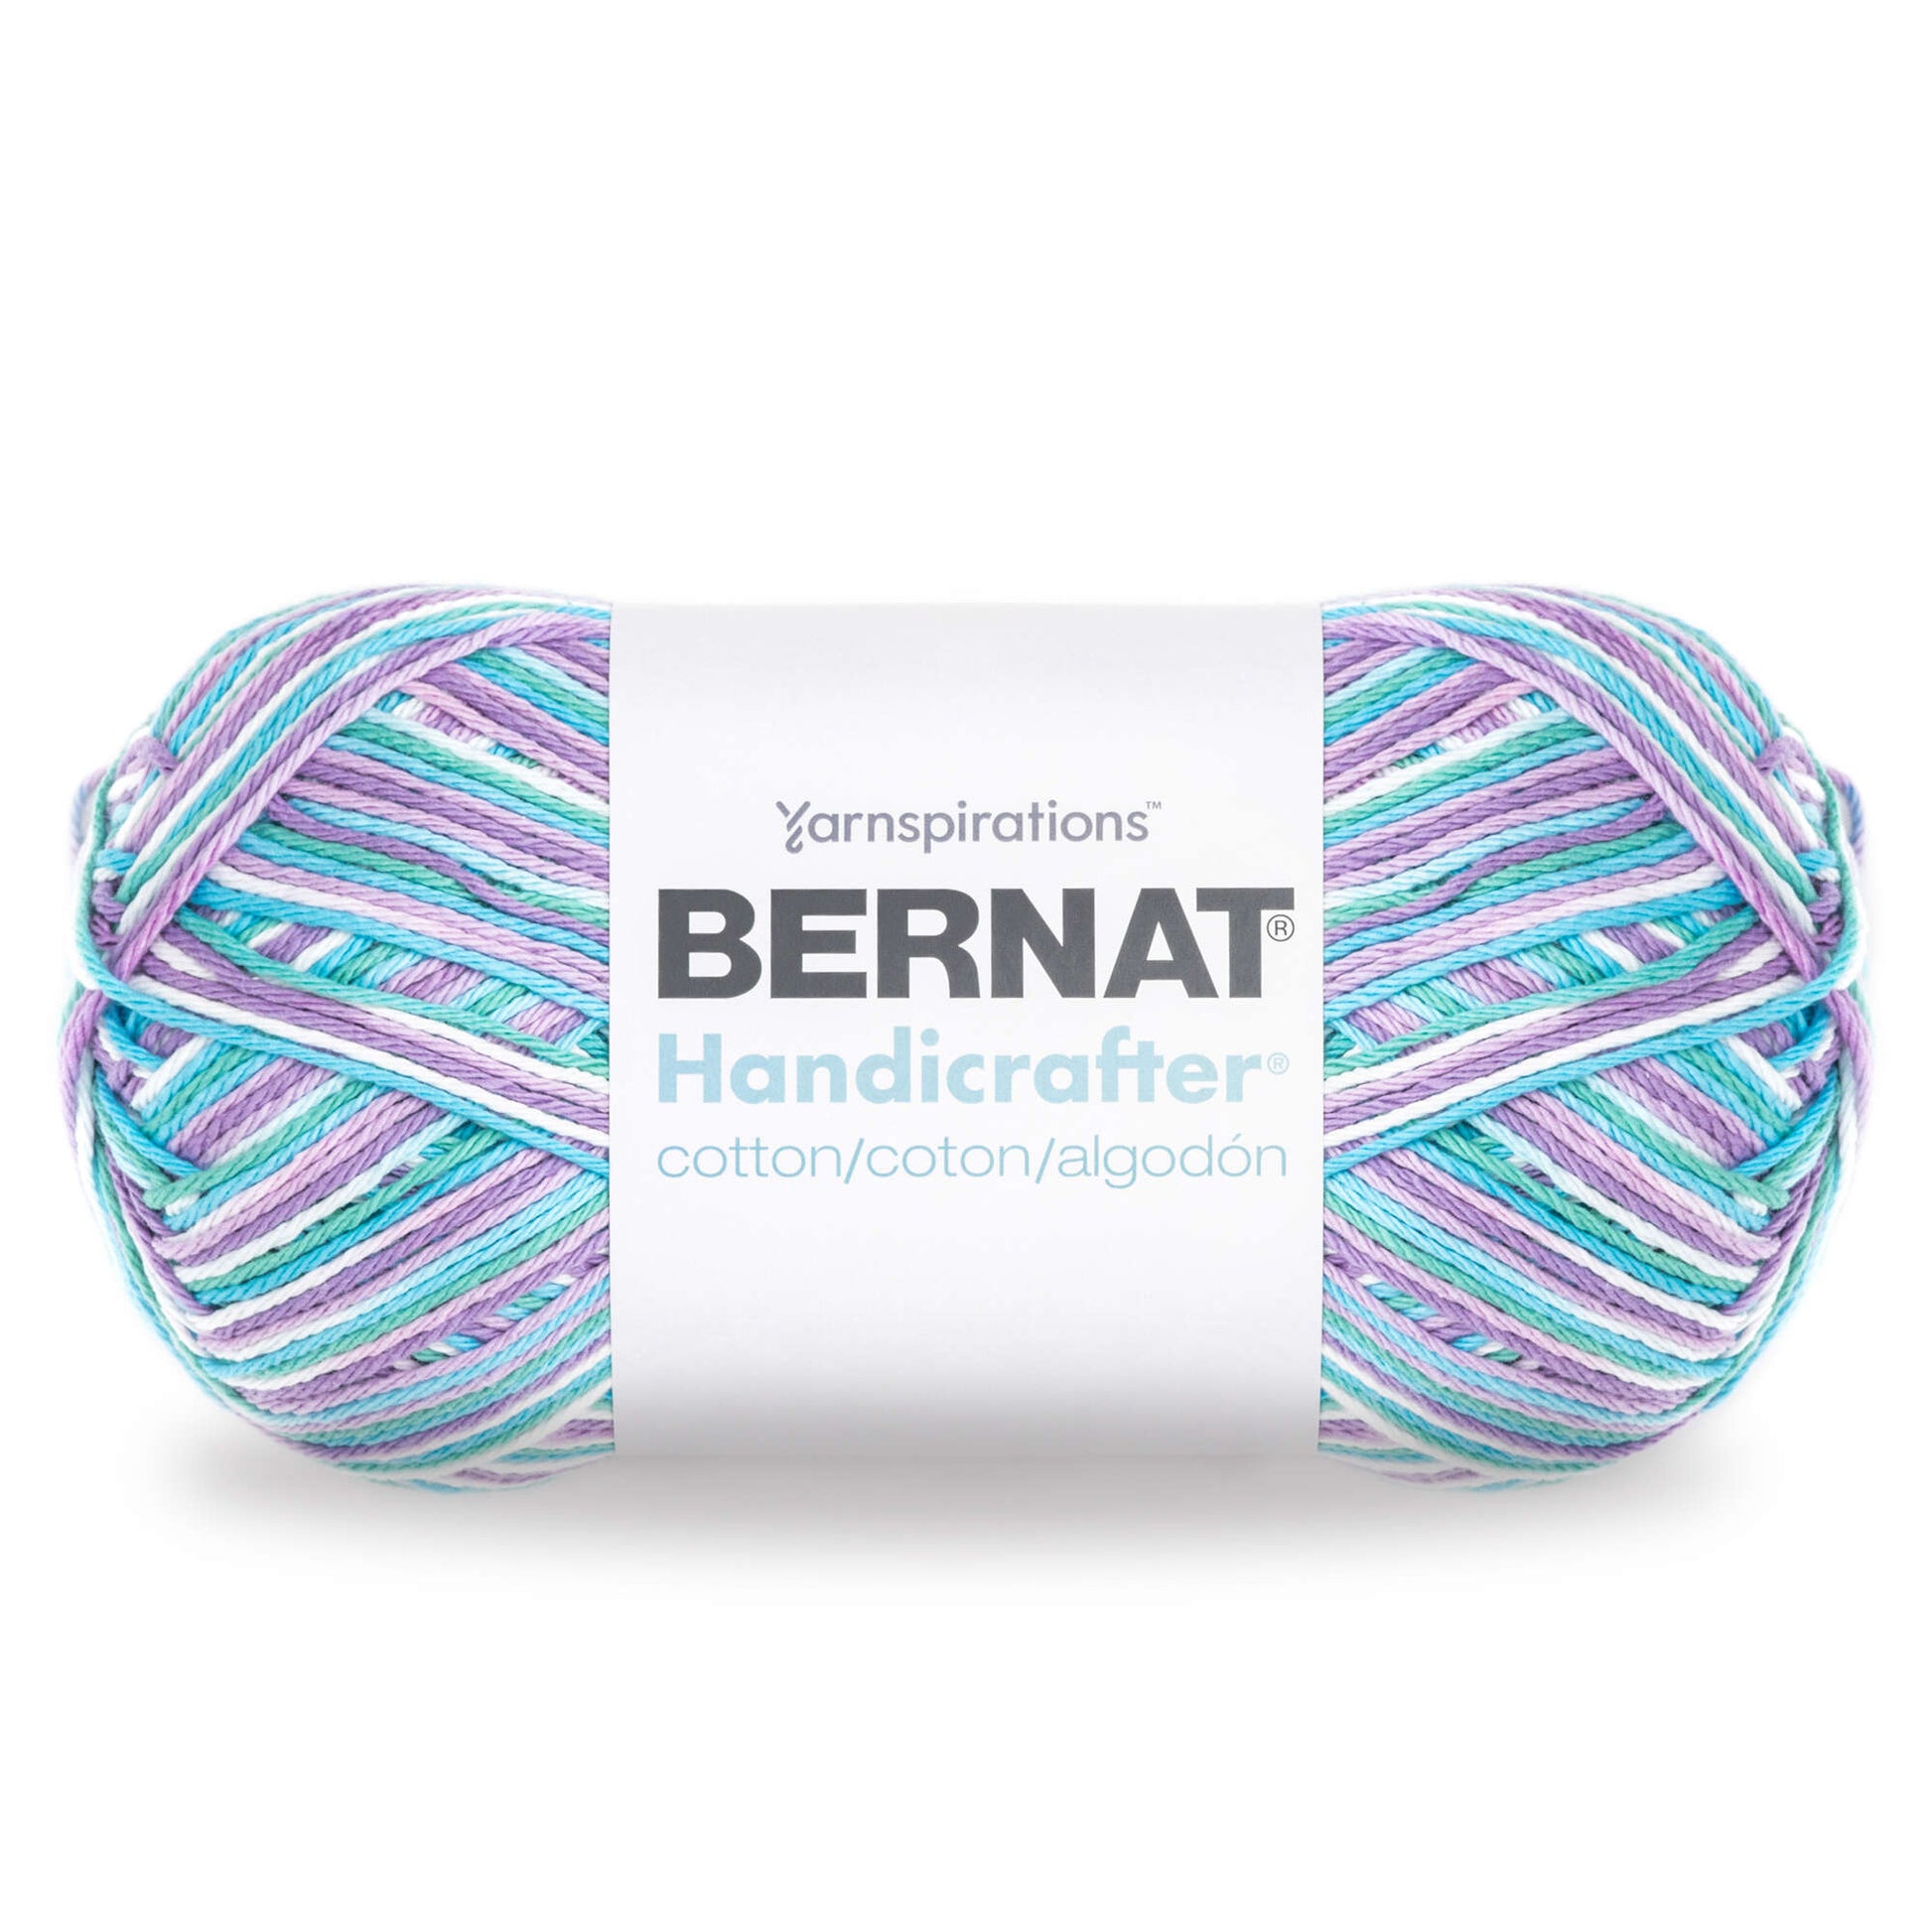 New Yarnspirations Bernat Handicrafter Cotton Yarn 12 oz 340g in Blue Camo